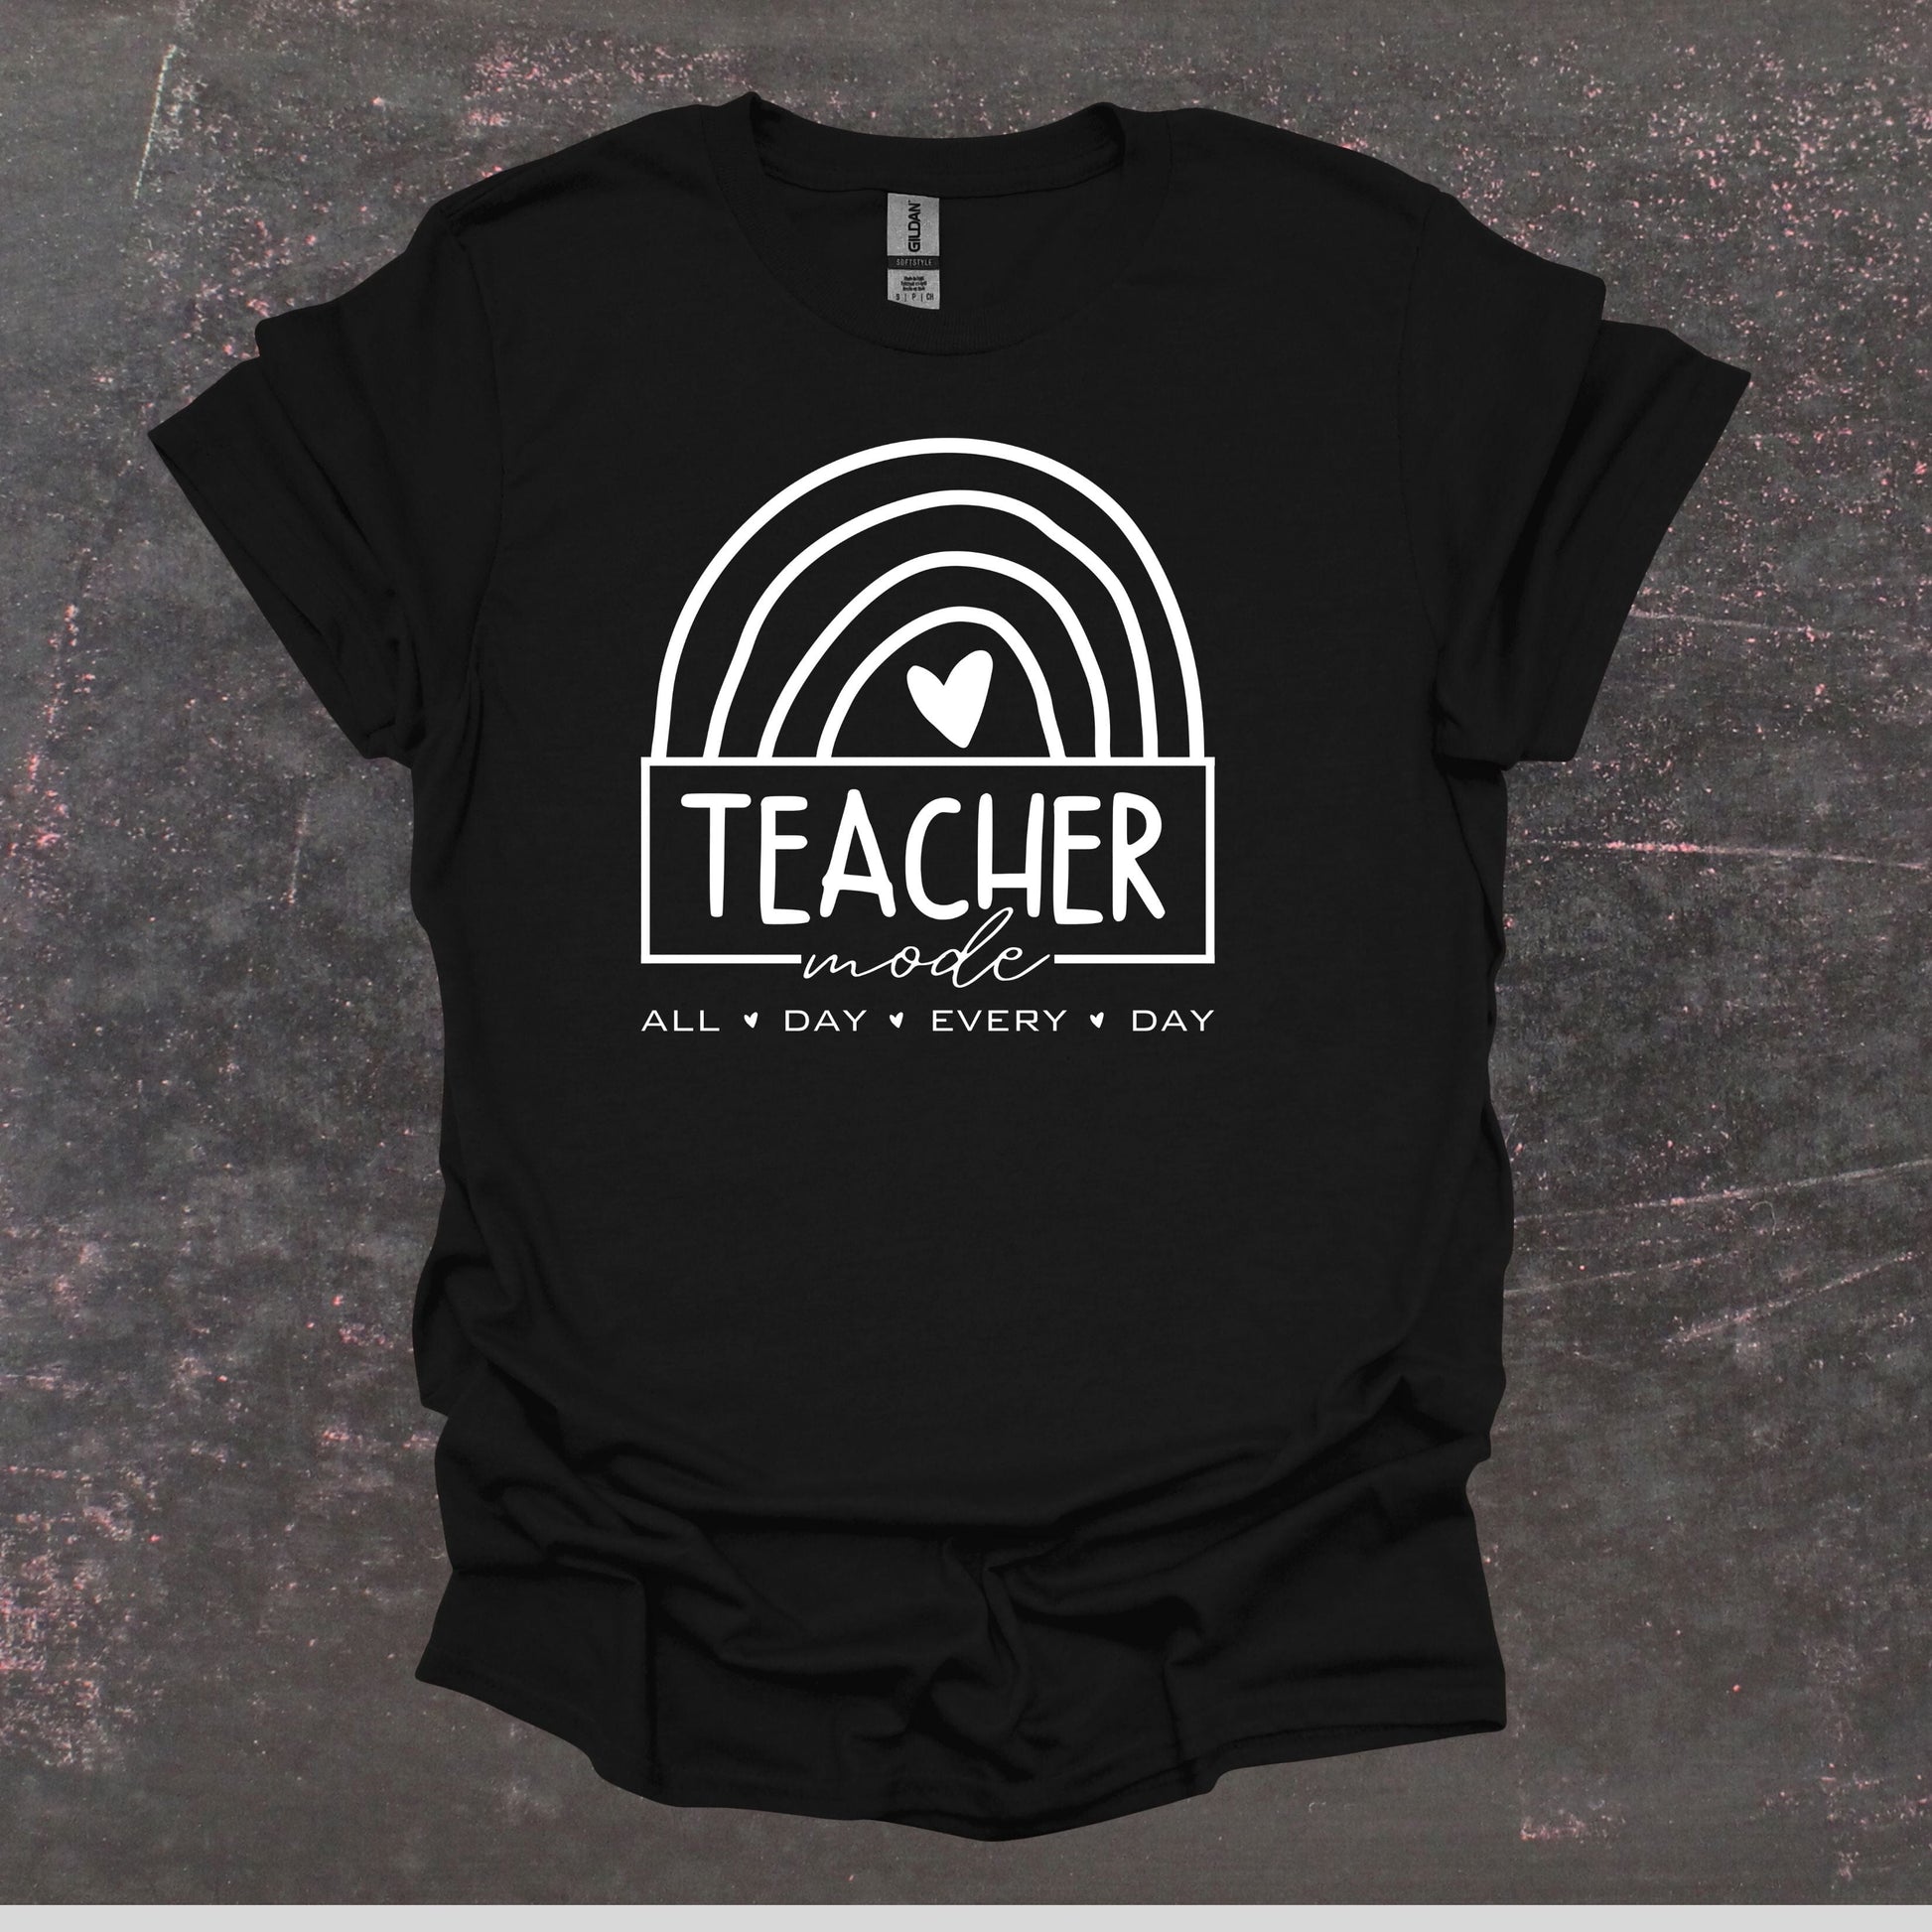 Teacher Mode - Teacher T Shirt - Adult Tee Shirts T-Shirts Graphic Avenue Black Adult Small 